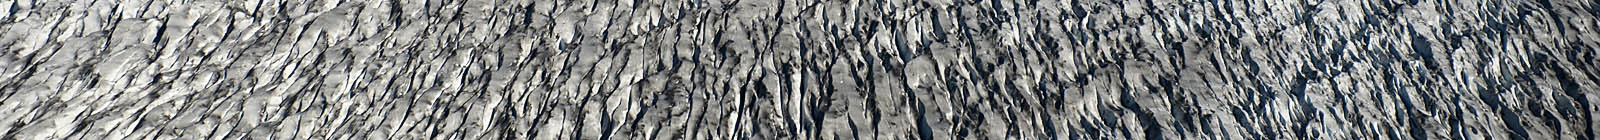 Grey glacier, Torres del Paine, Chile - Banner